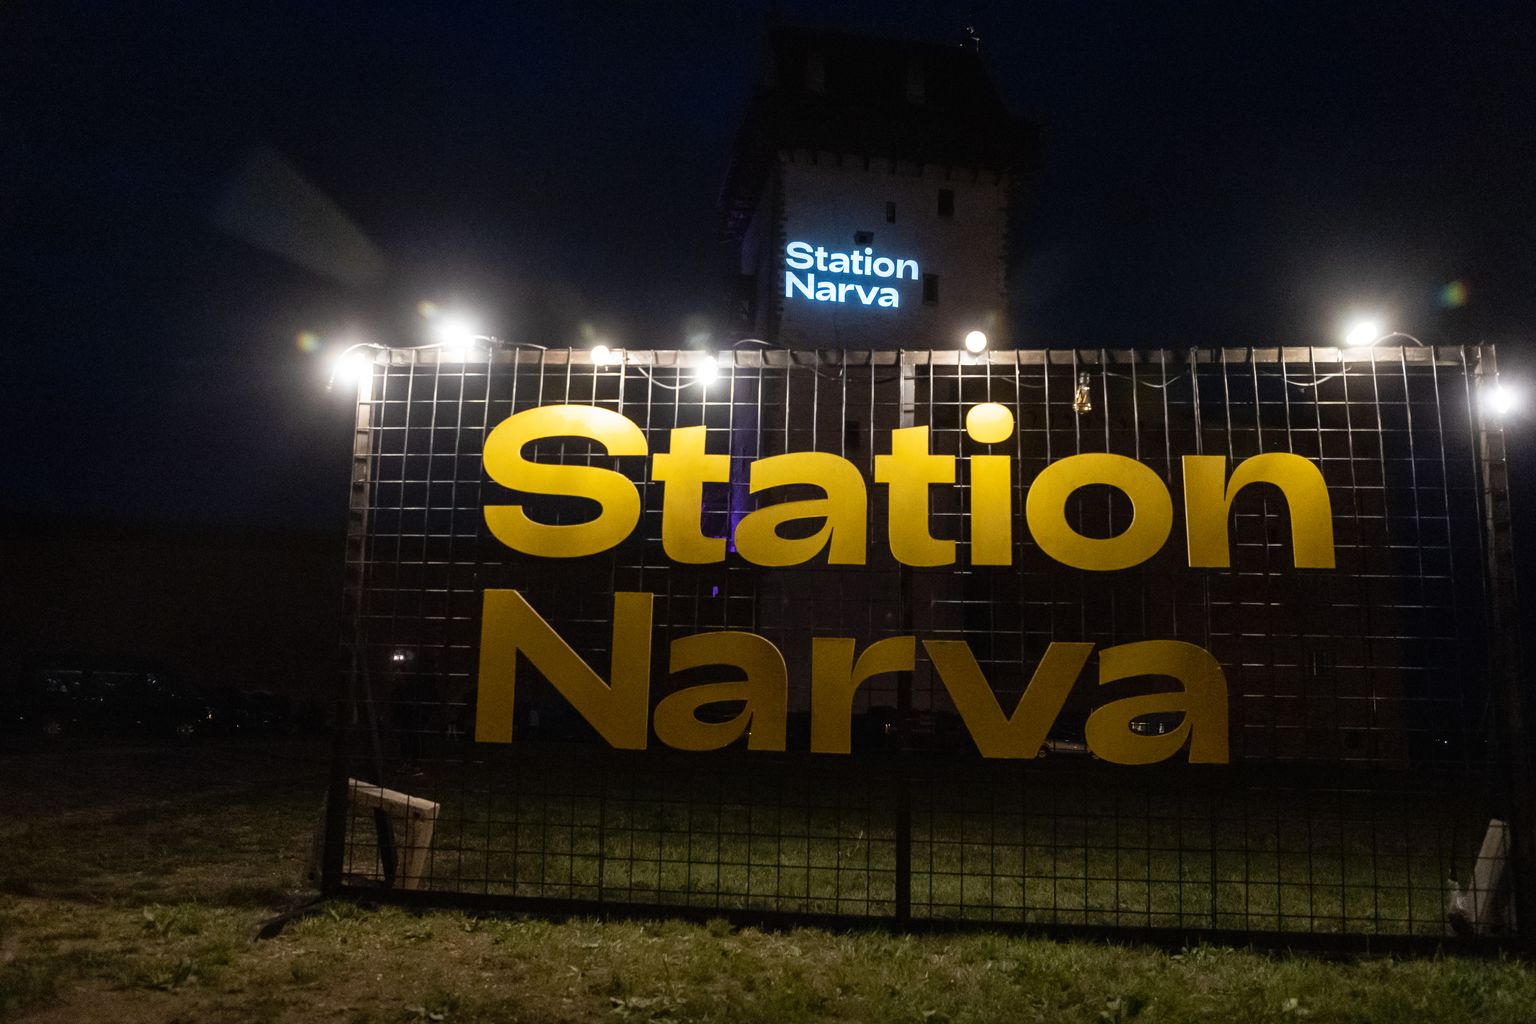 06.08.2021, Narva. Festival Station Narva, teine päev.